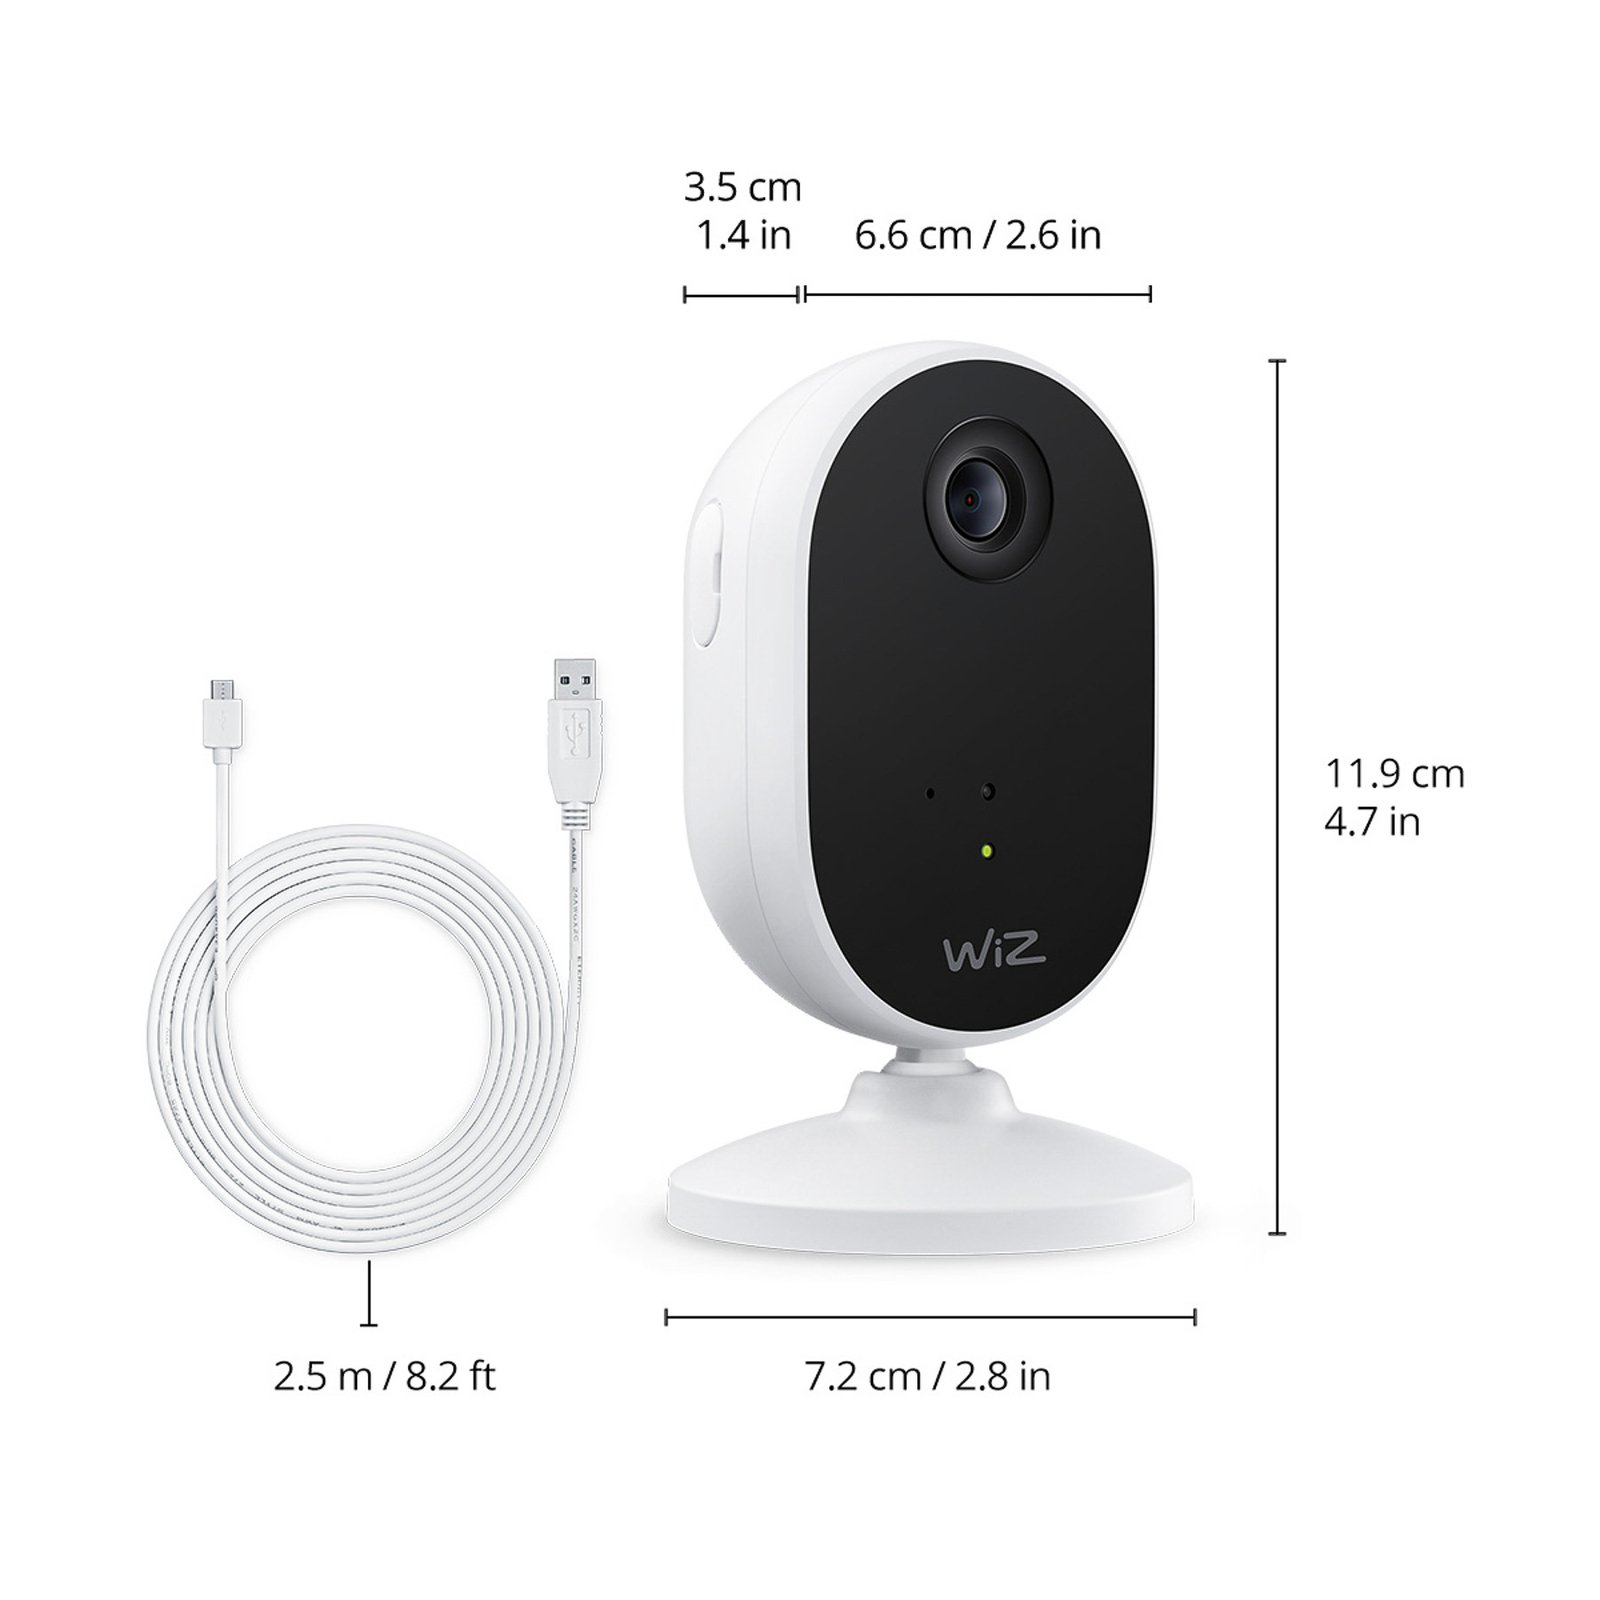 WiZ indoor security camera with WiFi